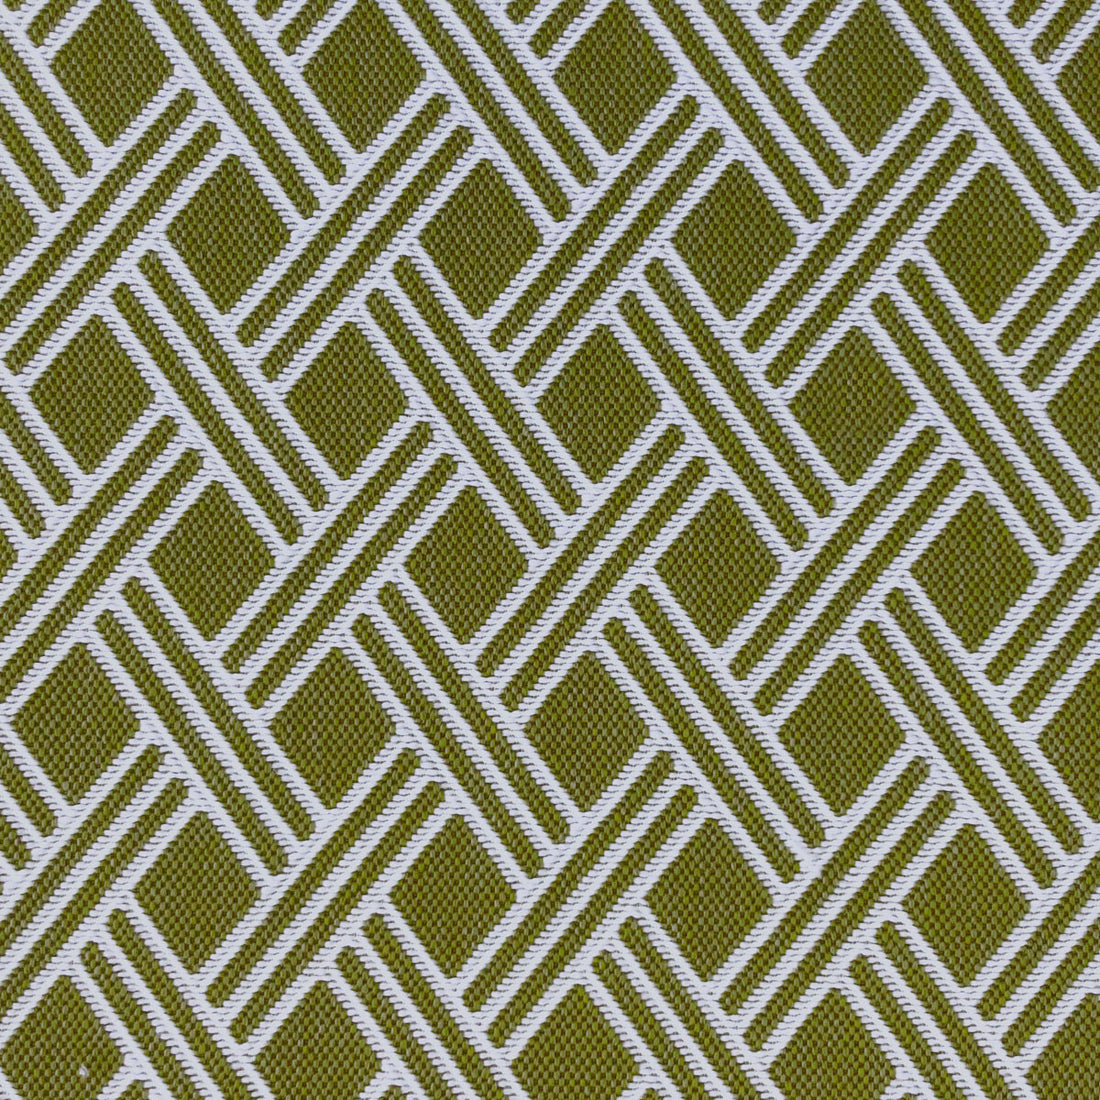 Dorcas fabric in verde hoja color - pattern LCT1060.001.0 - by Gaston y Daniela in the Lorenzo Castillo VI collection